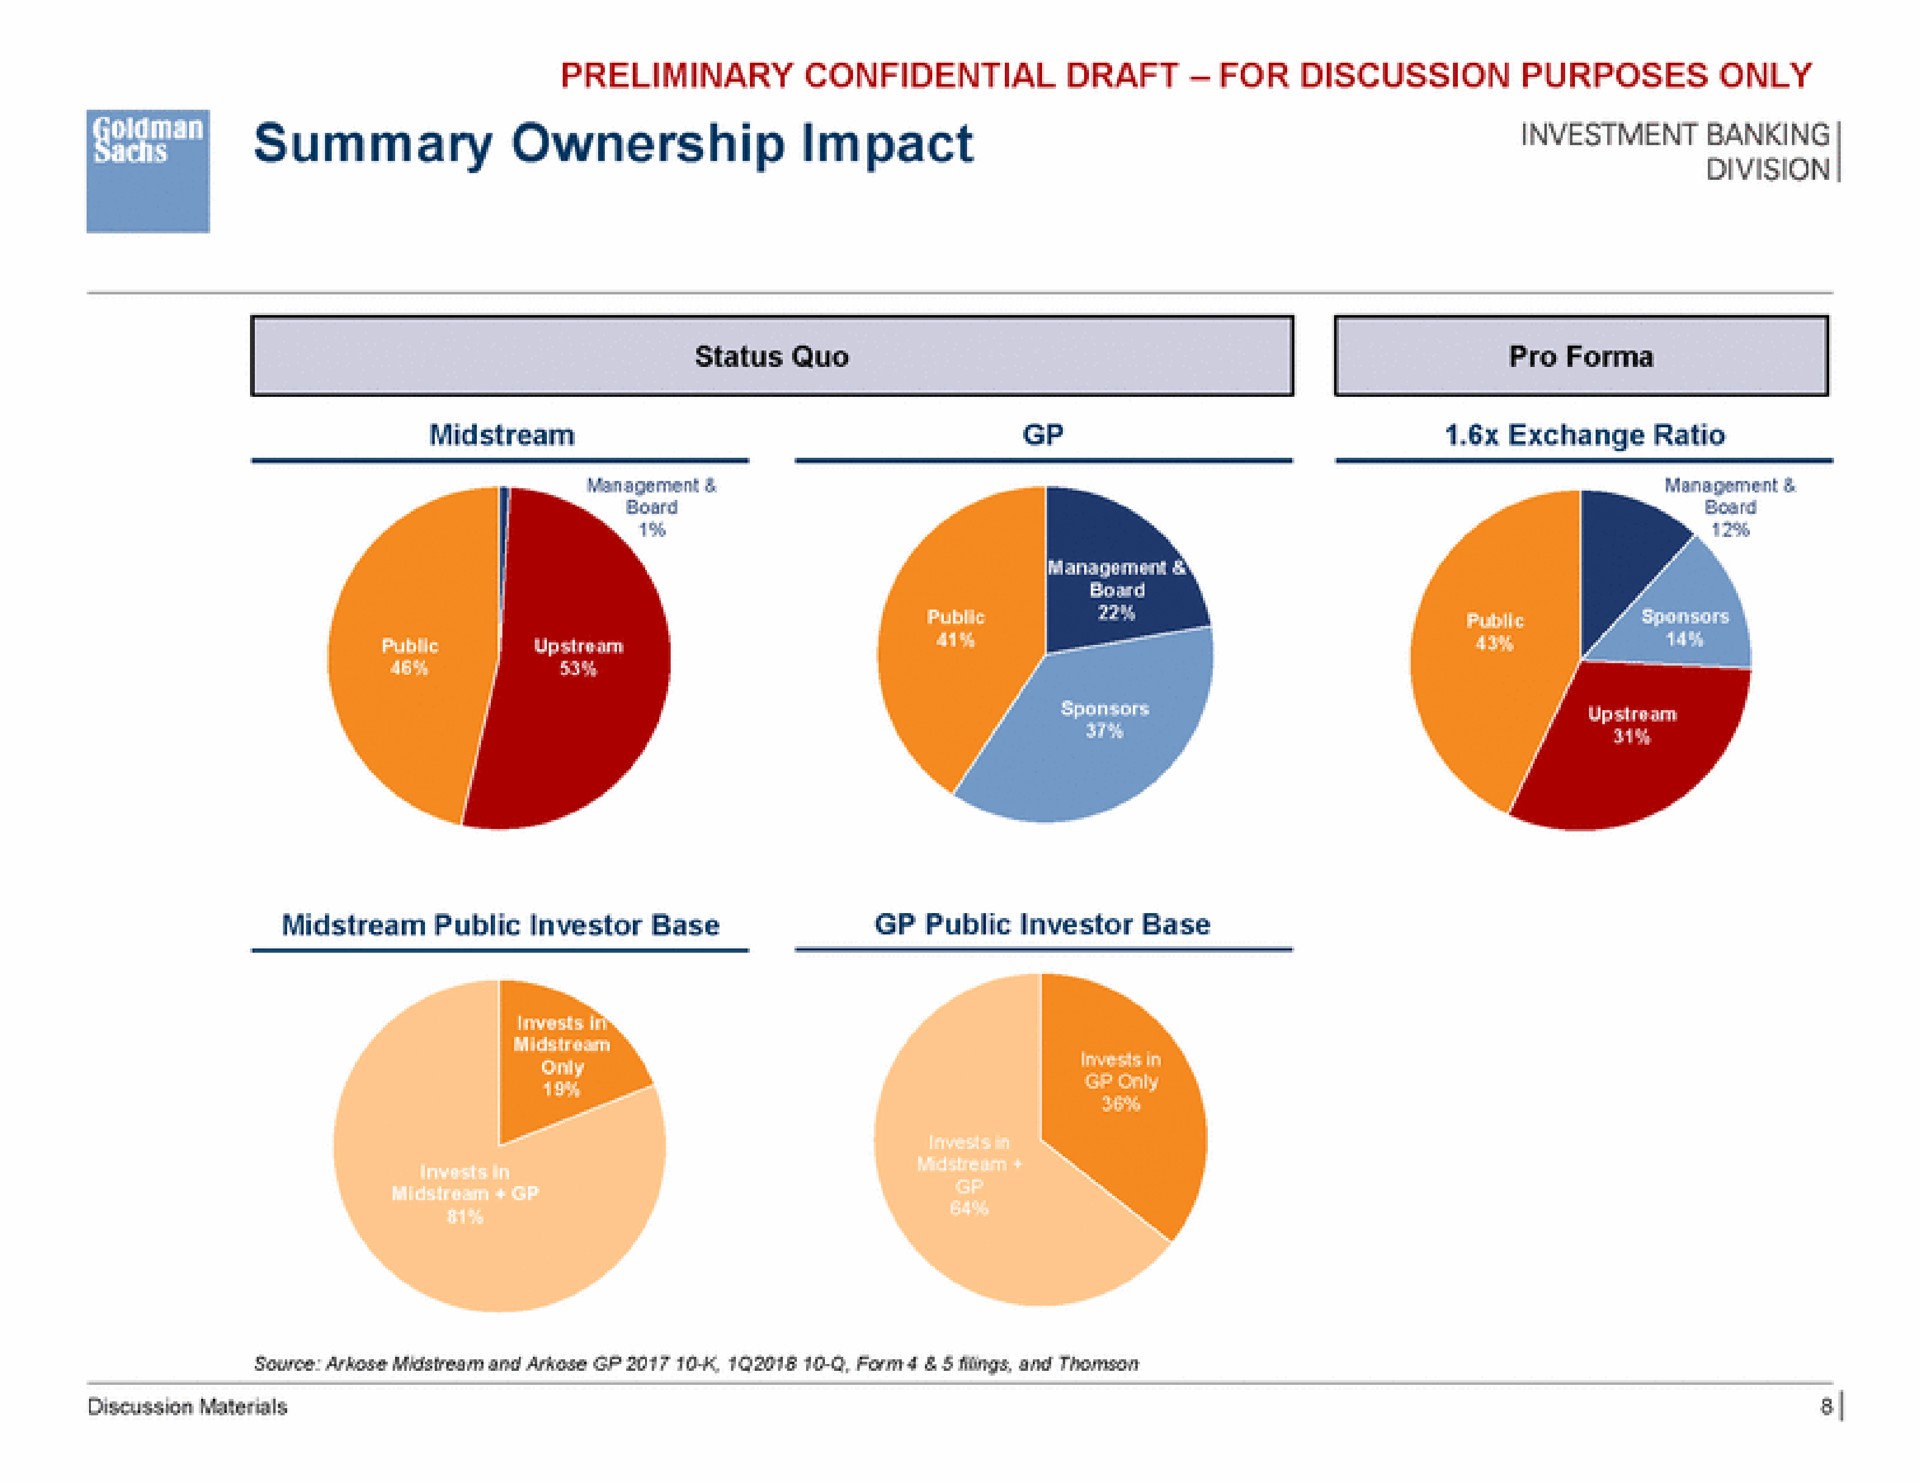 a summary ownership impact | Goldman Sachs